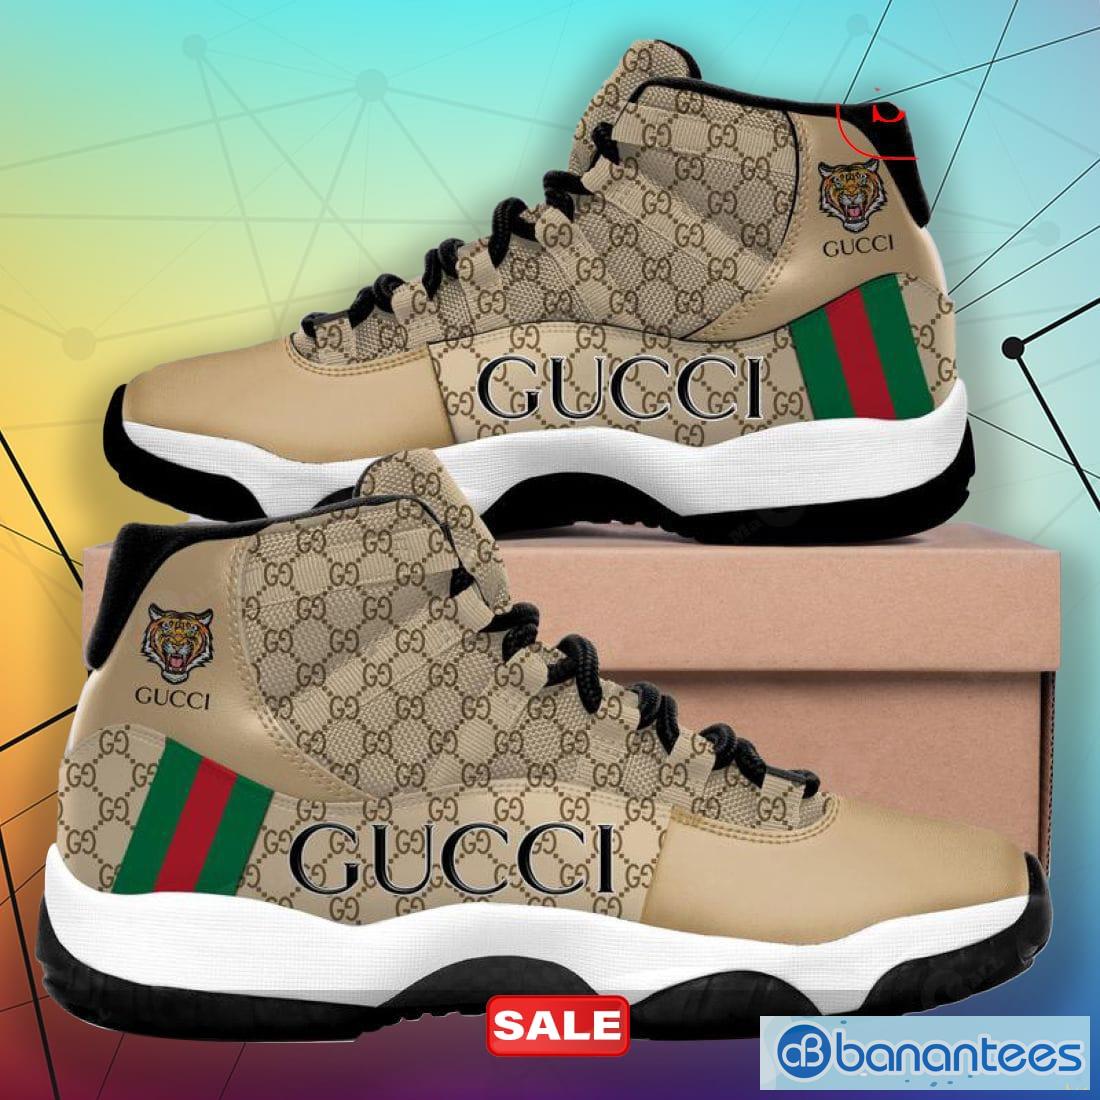 Gucci brown tiger air jordan 11 sneakers shoes hot gifts for men